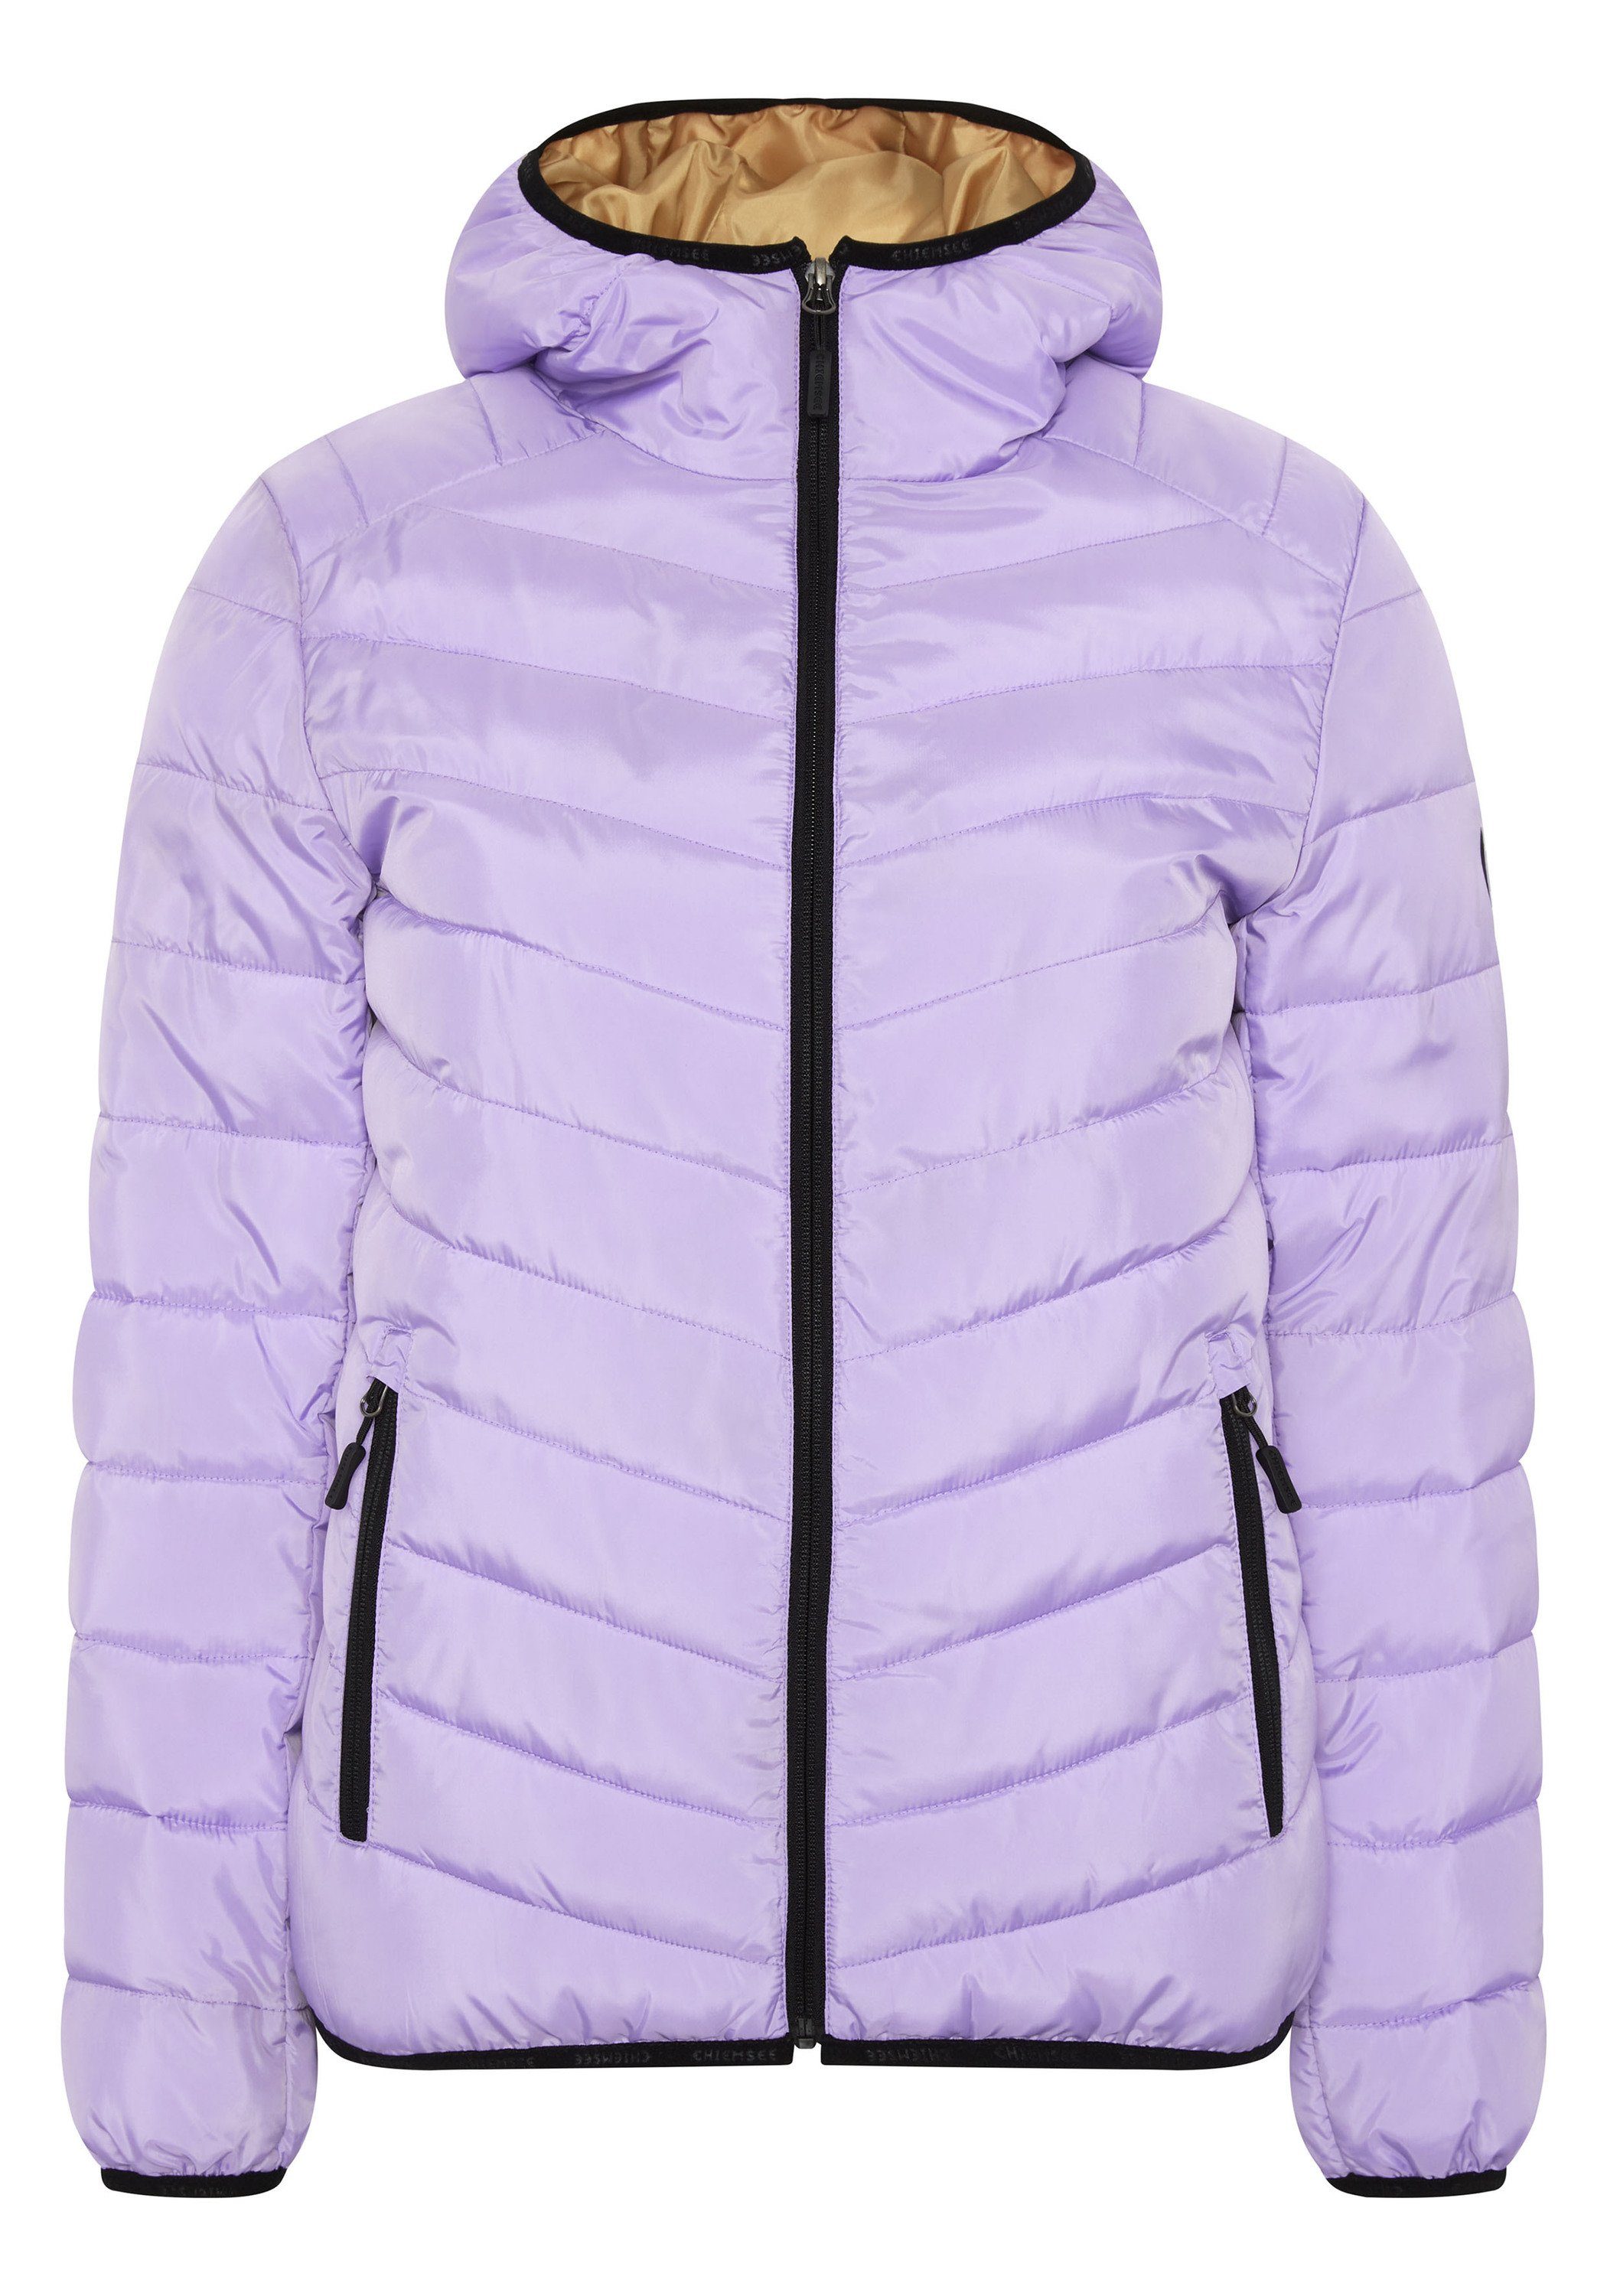 Chiemsee Outdoorjacke Wattierte Jacke in moderner Stepp-Optik 1 15-3716 Purple Rose | Jacken